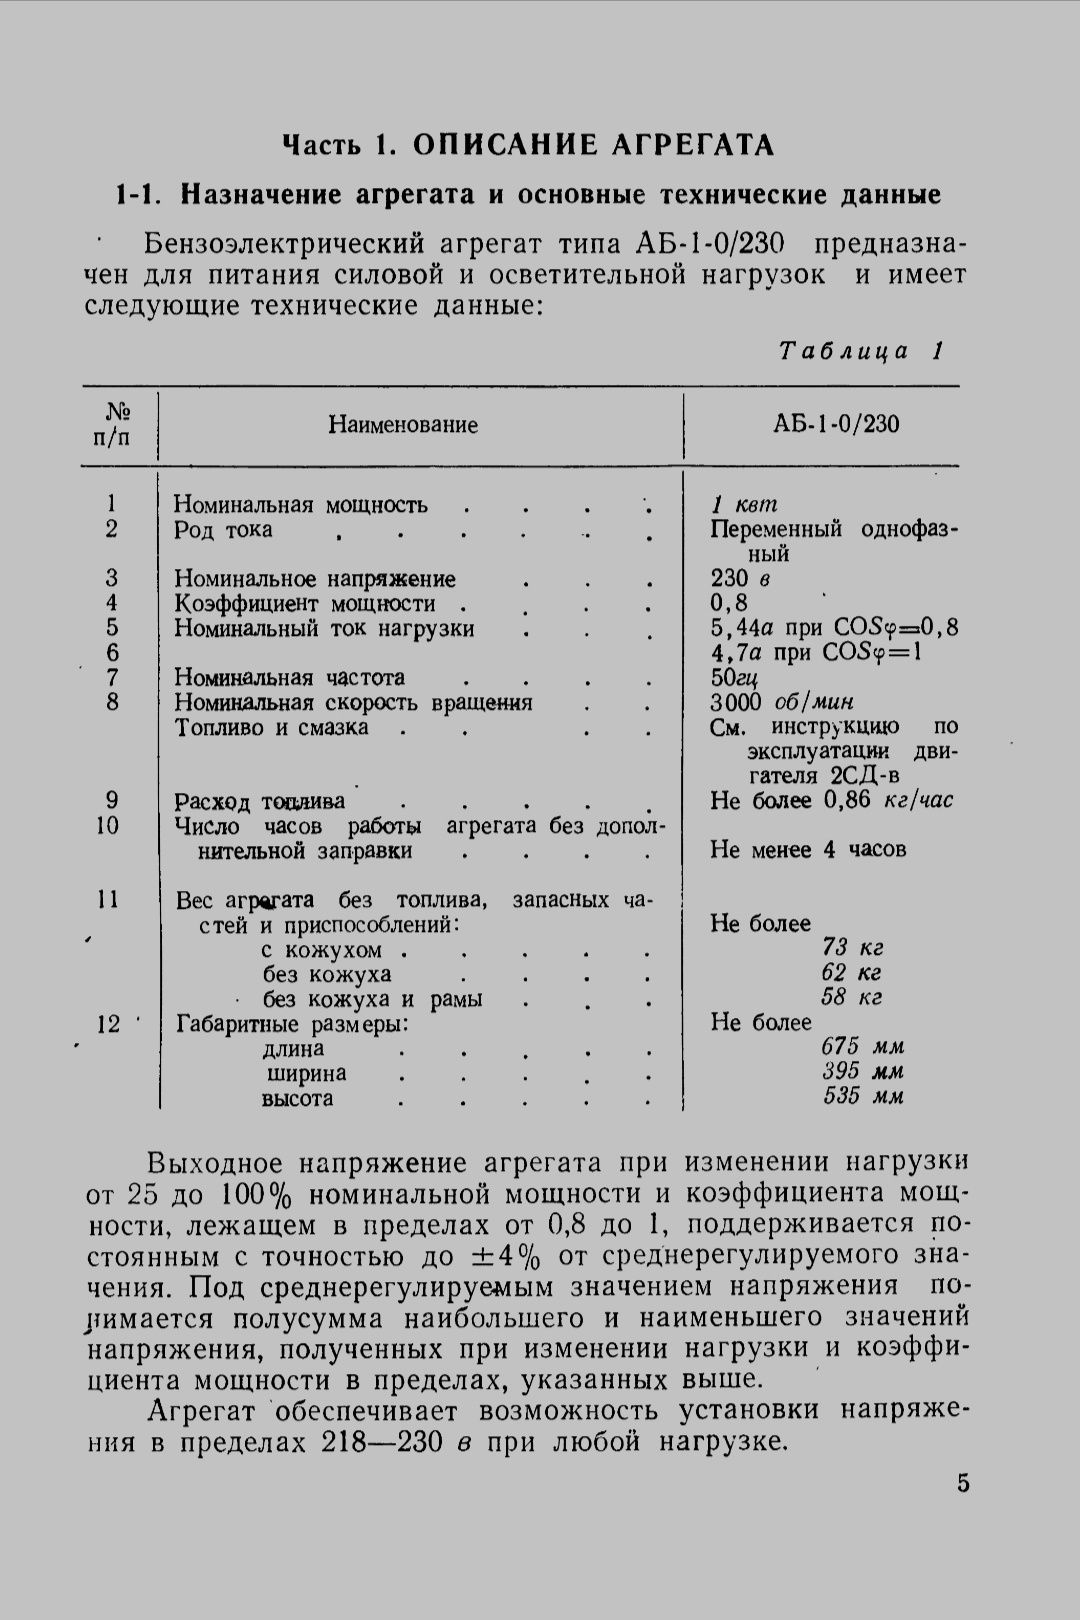 Руски генератор АБ-1-0/230 еднофазен